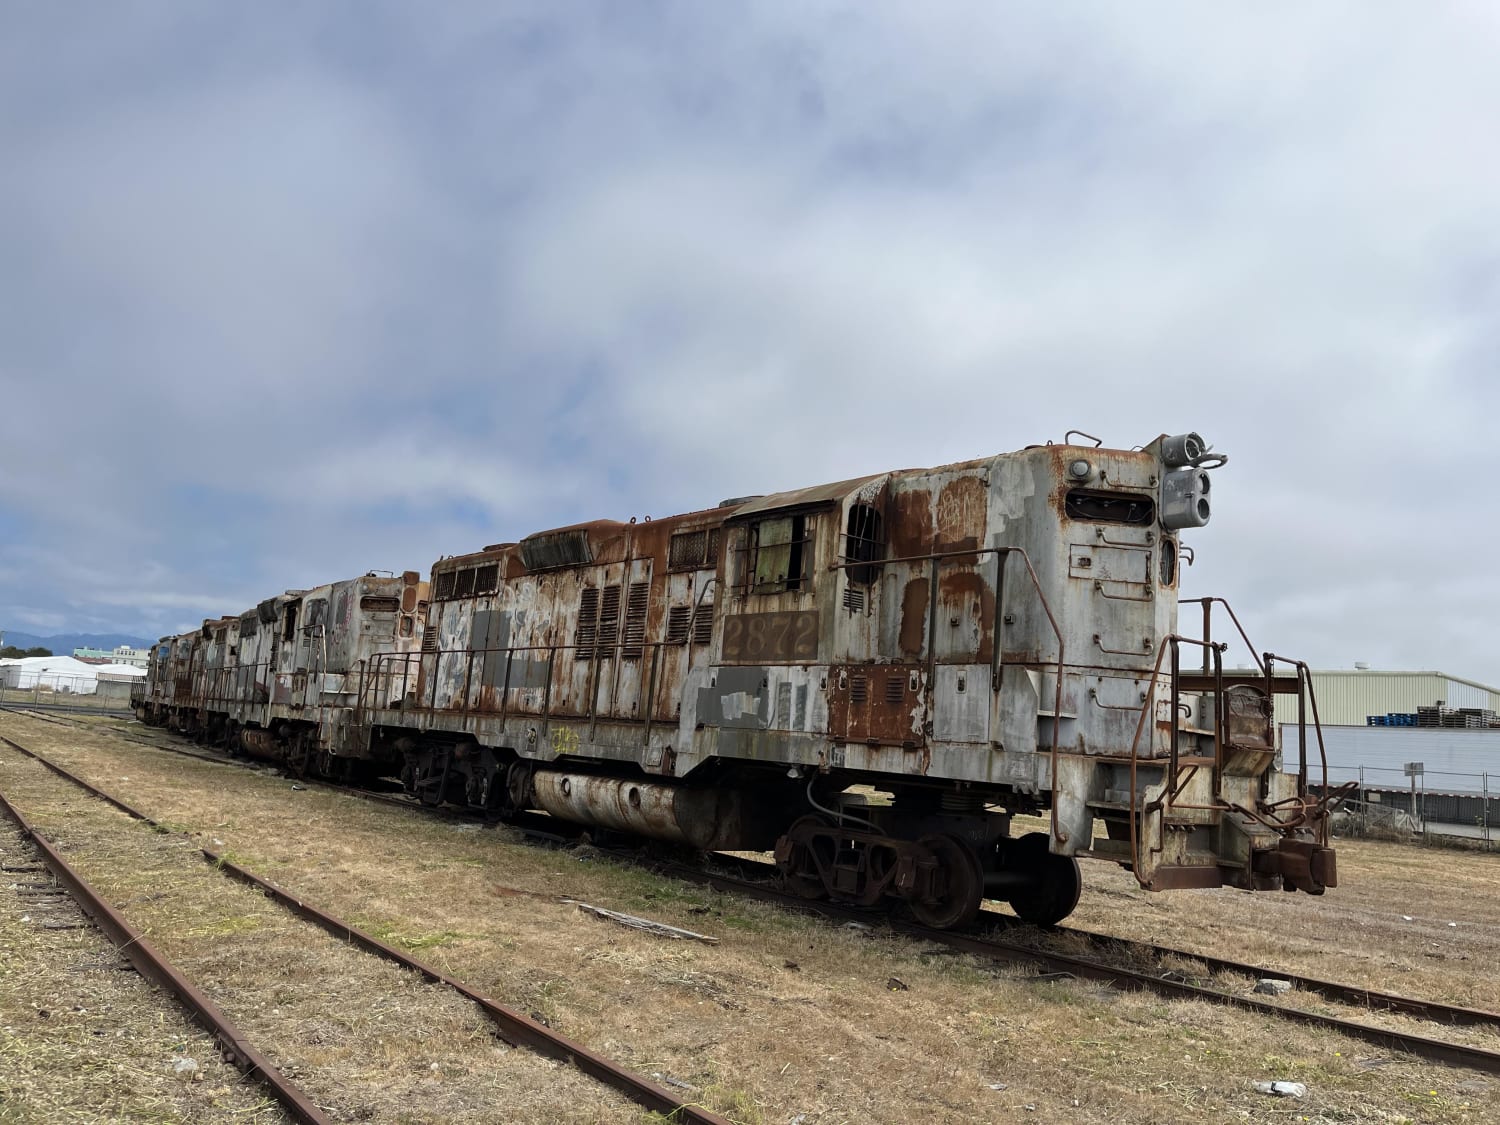 Train engines in Eureka, CA